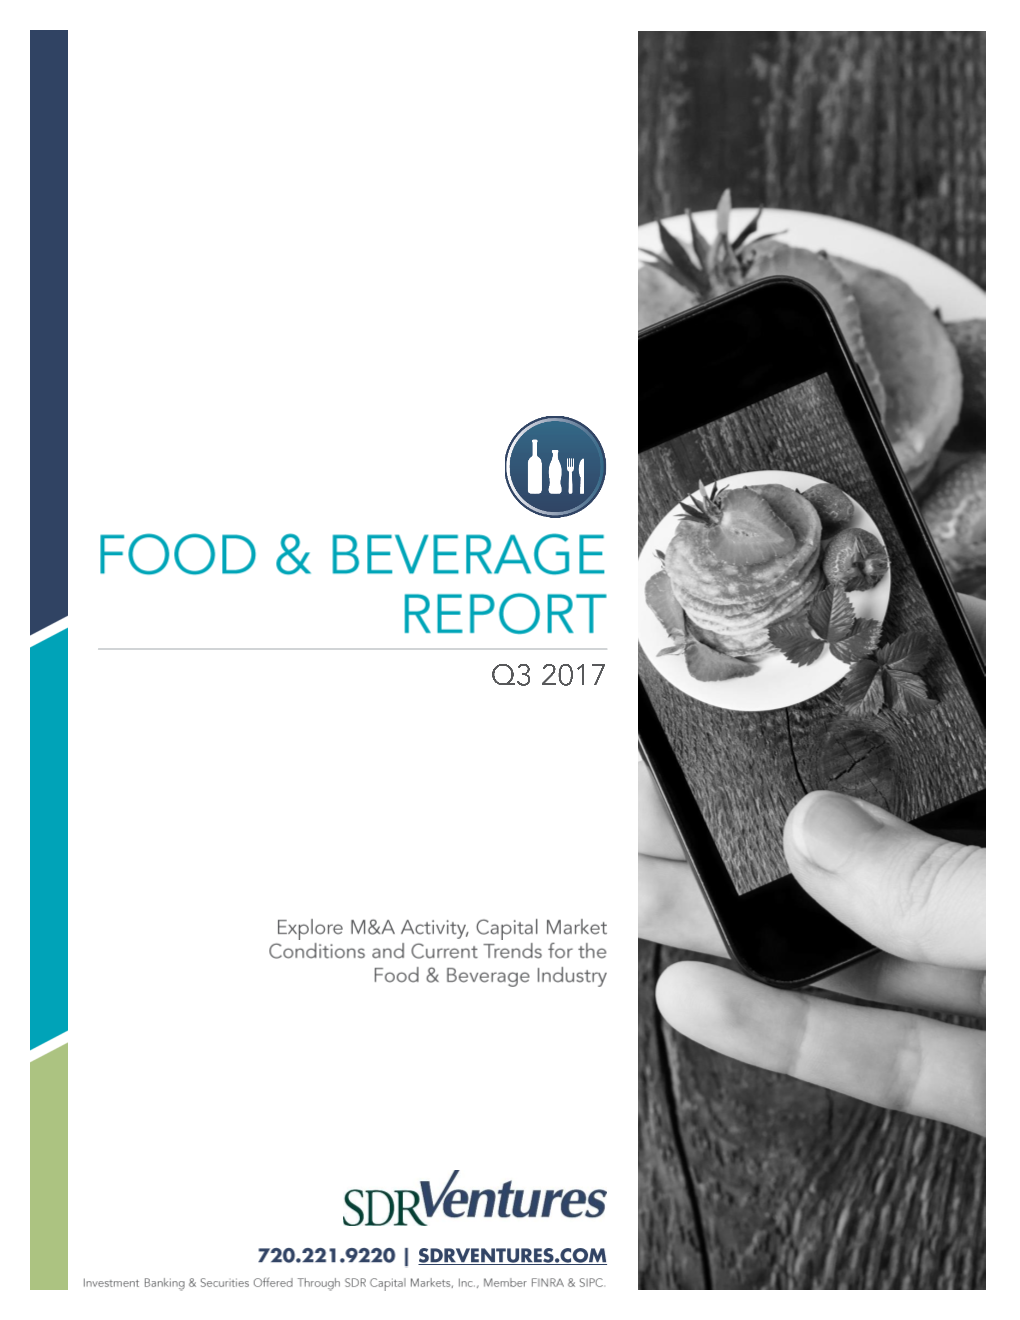 Food & Beverage Report Q3 2017